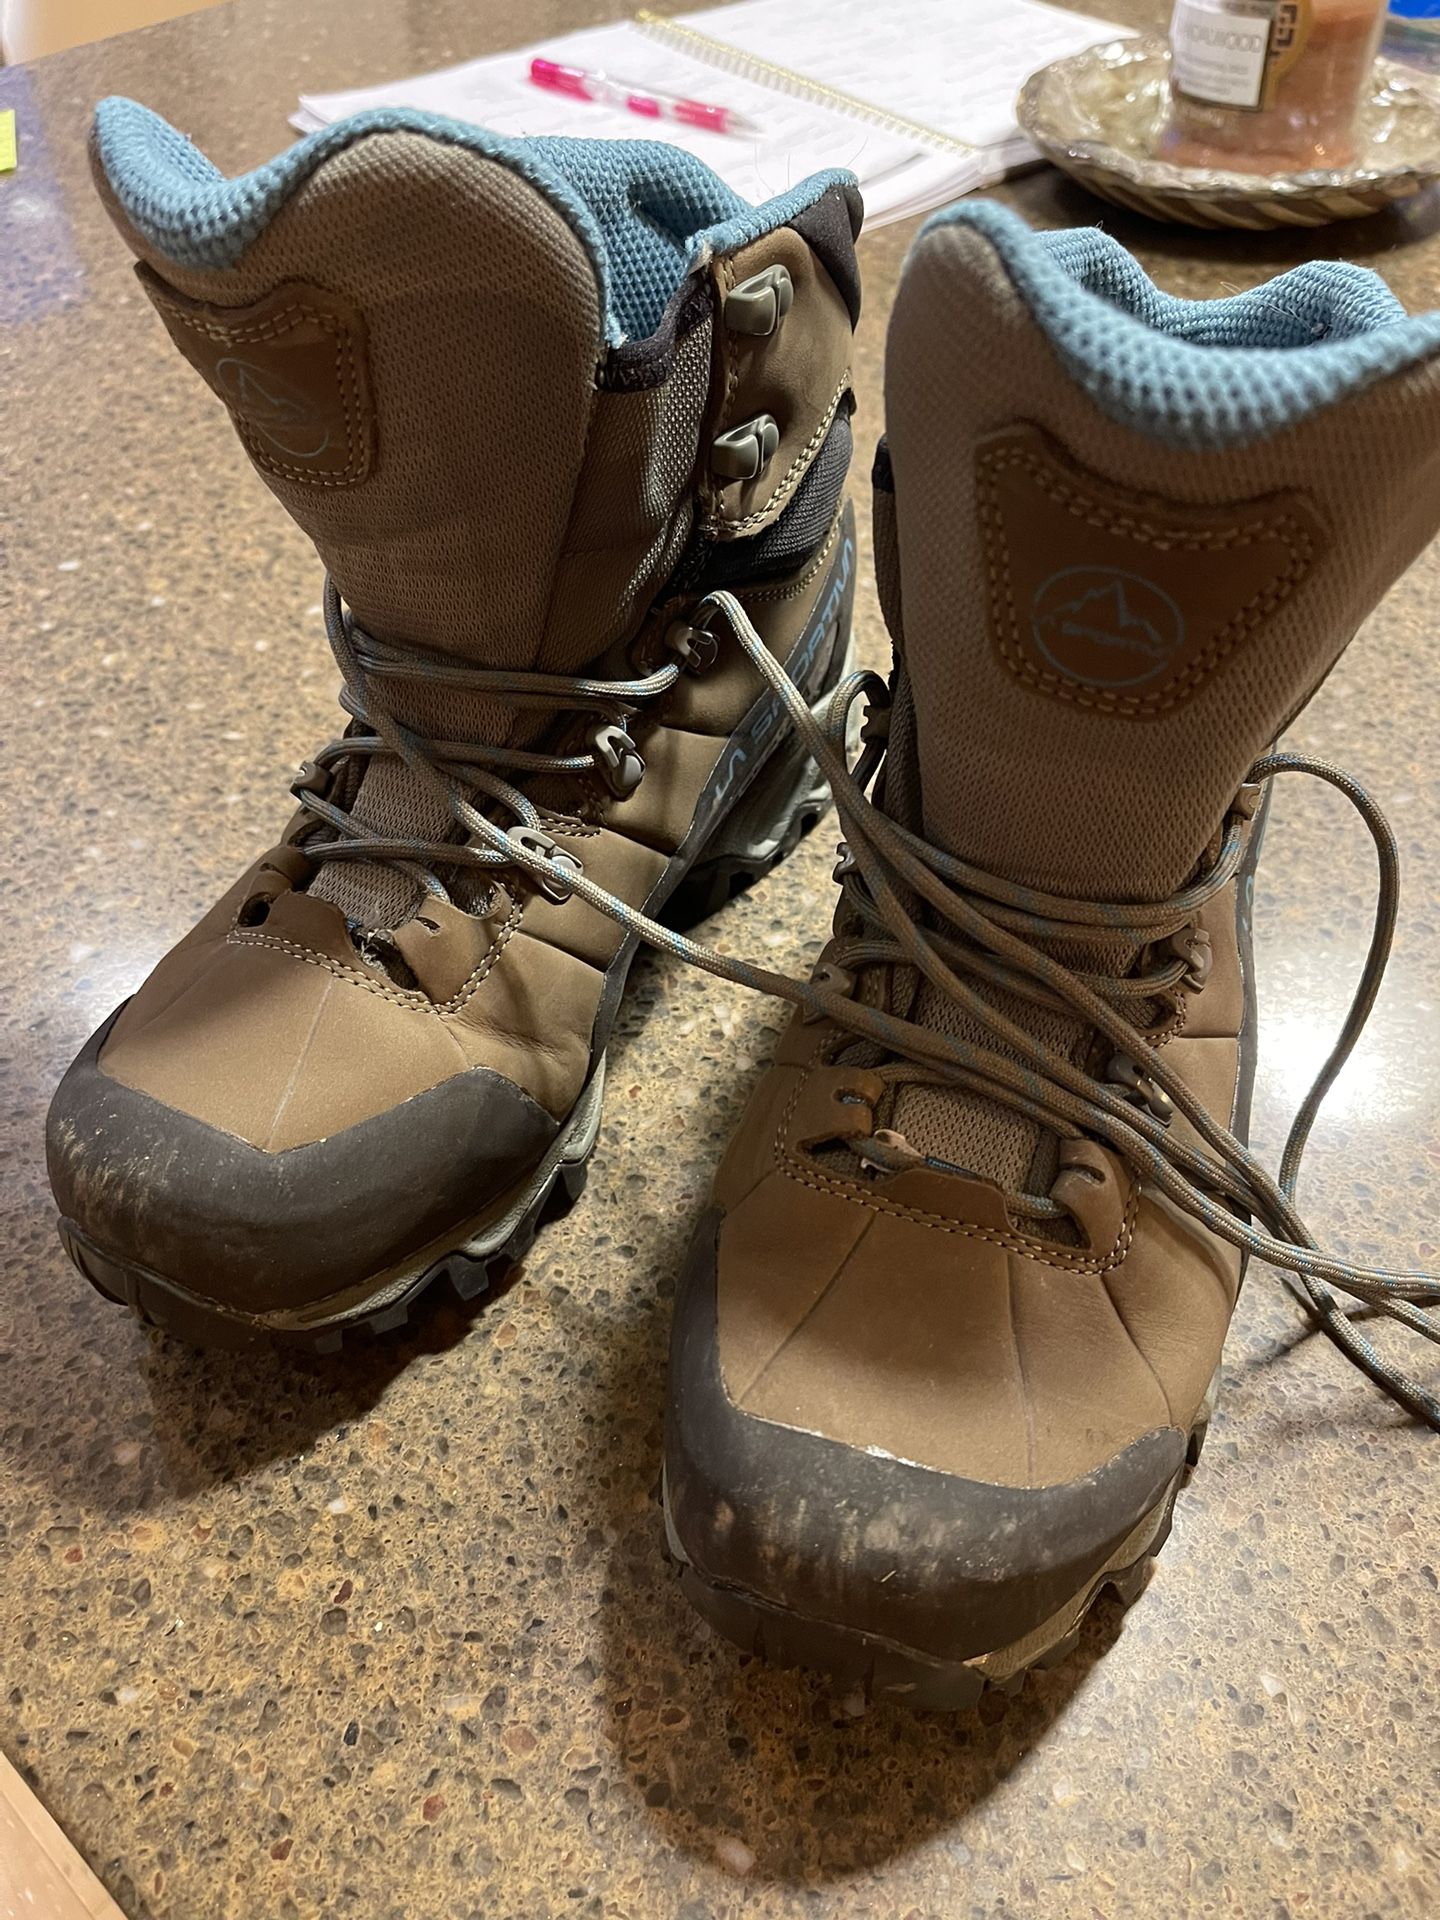 La Sportiva Nucleo High II GTX Hiking Boots - Women's Size 7